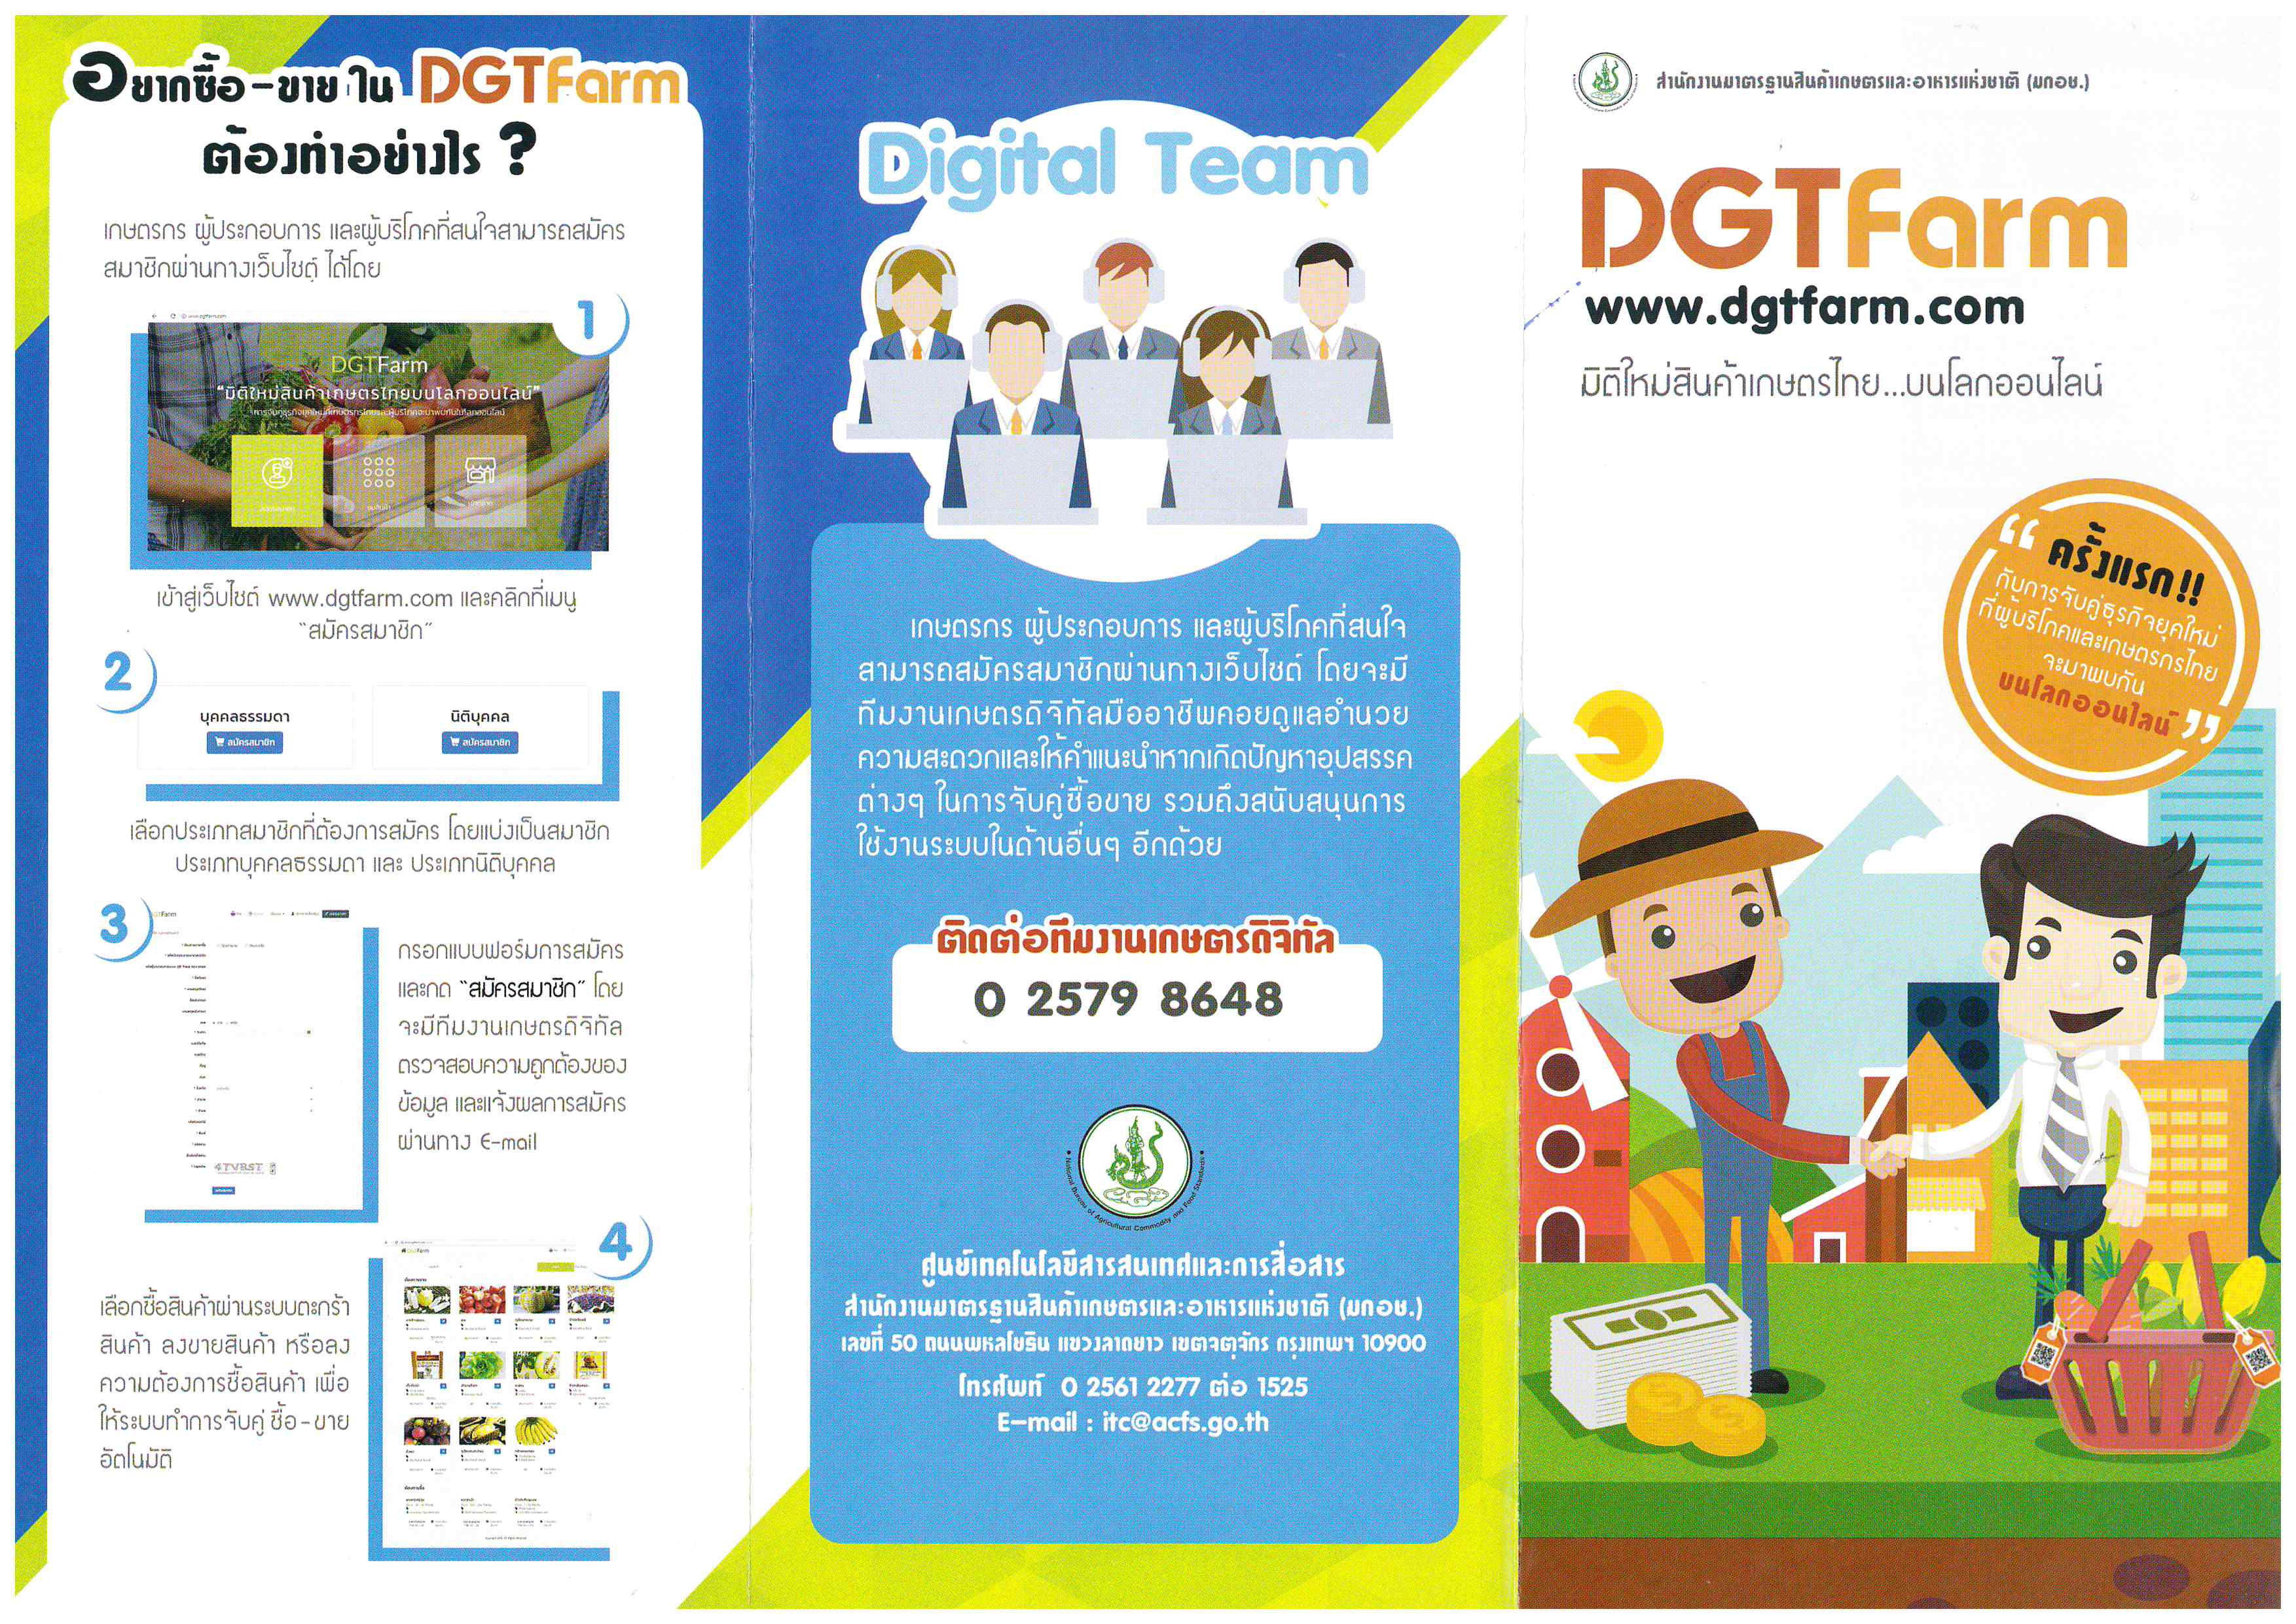 www.dgtfarm.com มิติใหม่สินค้าเกษตรไทย บนโลกออนไลน์ โดย สำนักงานมาตรฐษนสินค้าเกษตรและอาหารแห่งชาติ (มกอช.)